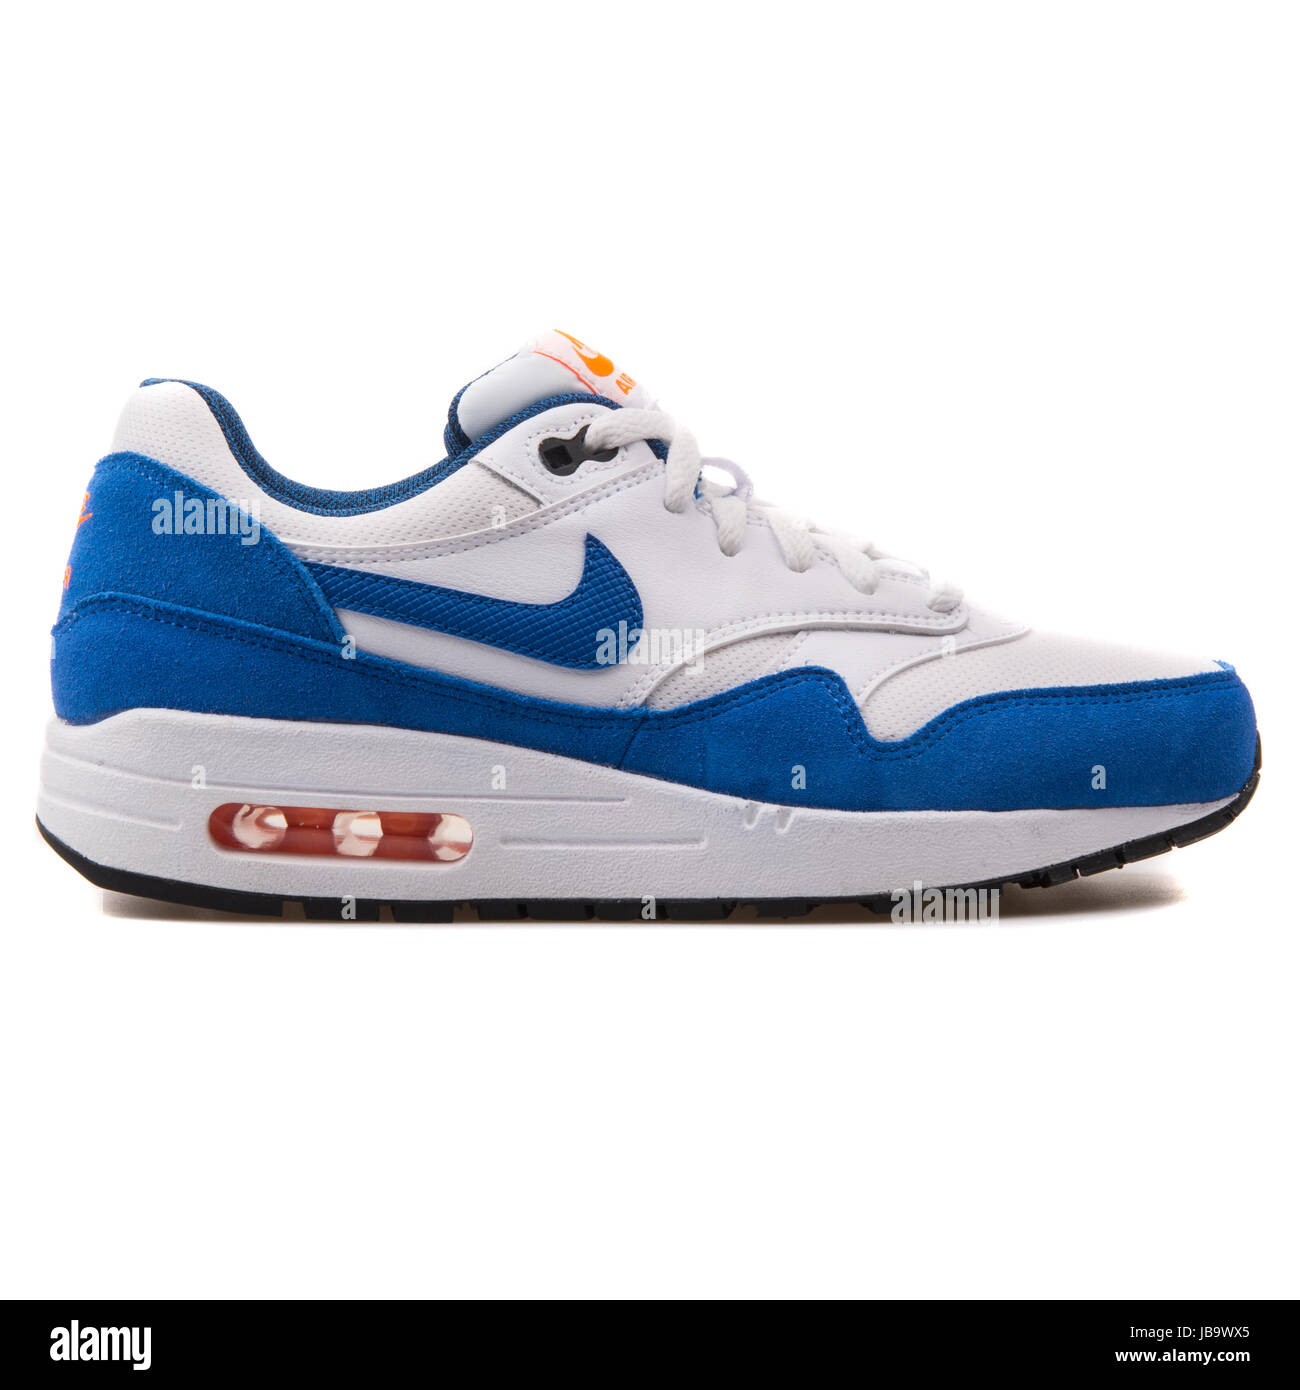 Nike Air Max 1 (GS) weiß und blau Jünglings Laufschuhe - 555766-120  Stockfotografie - Alamy